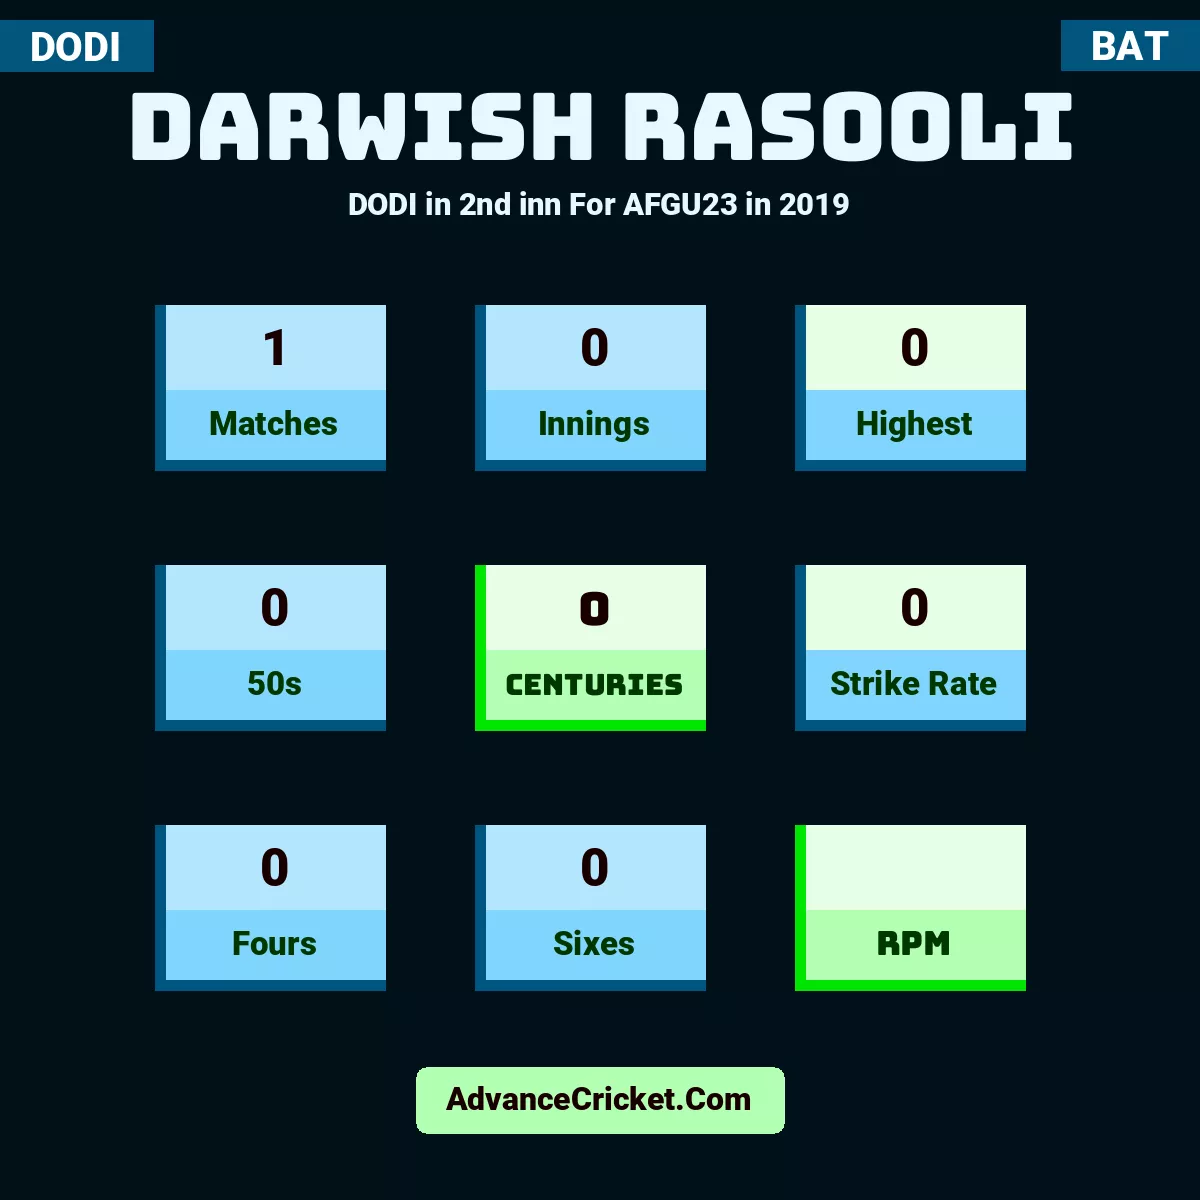 Darwish Rasooli DODI  in 2nd inn For AFGU23 in 2019, Darwish Rasooli played 1 matches, scored 0 runs as highest, 0 half-centuries, and 0 centuries, with a strike rate of 0. D.Rasooli hit 0 fours and 0 sixes.